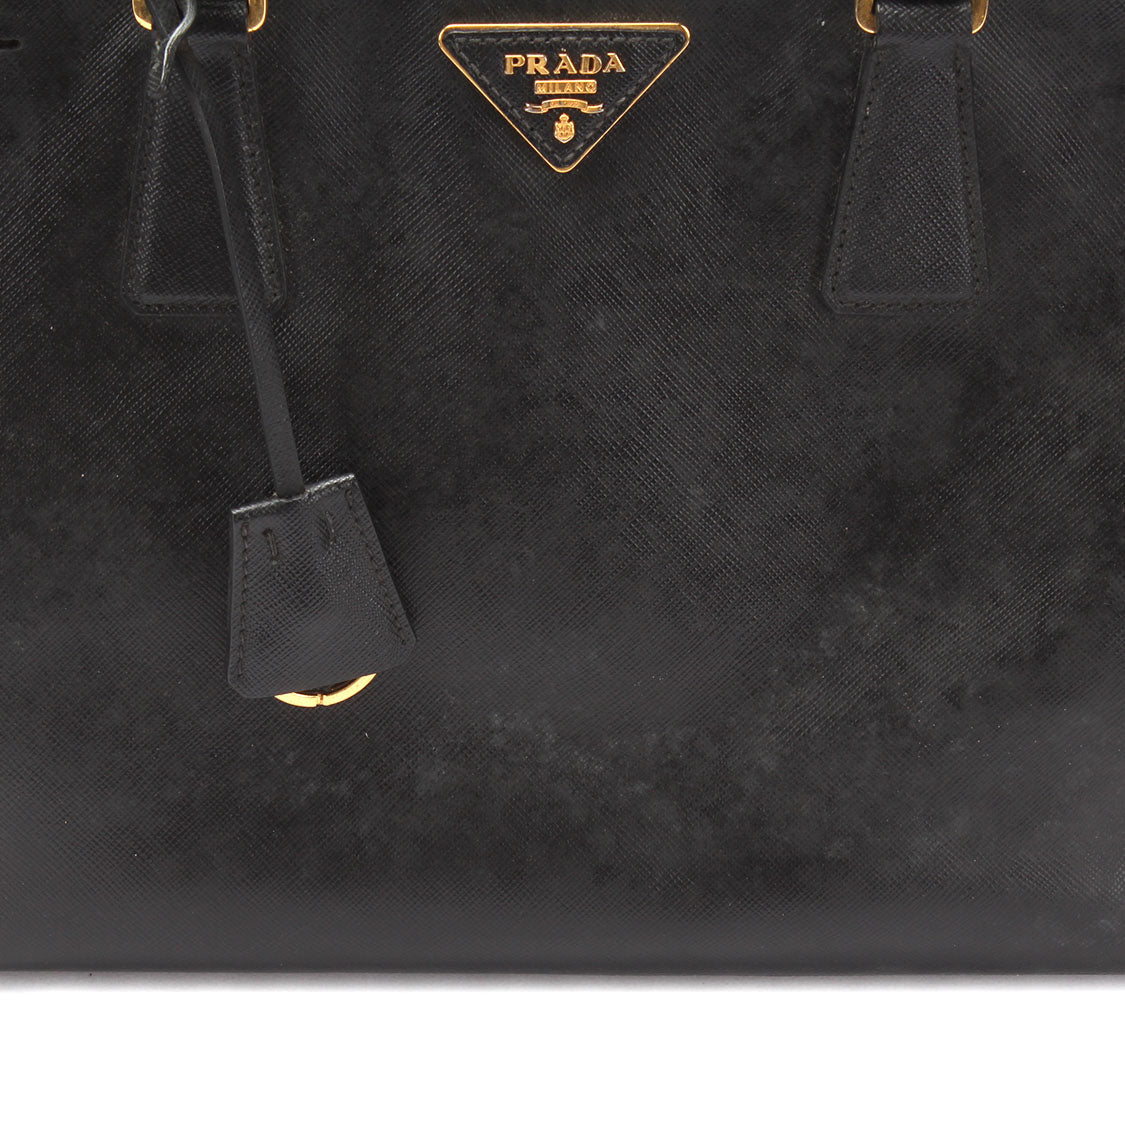 Vitello Lux Leather Tote Bag – LuxUness